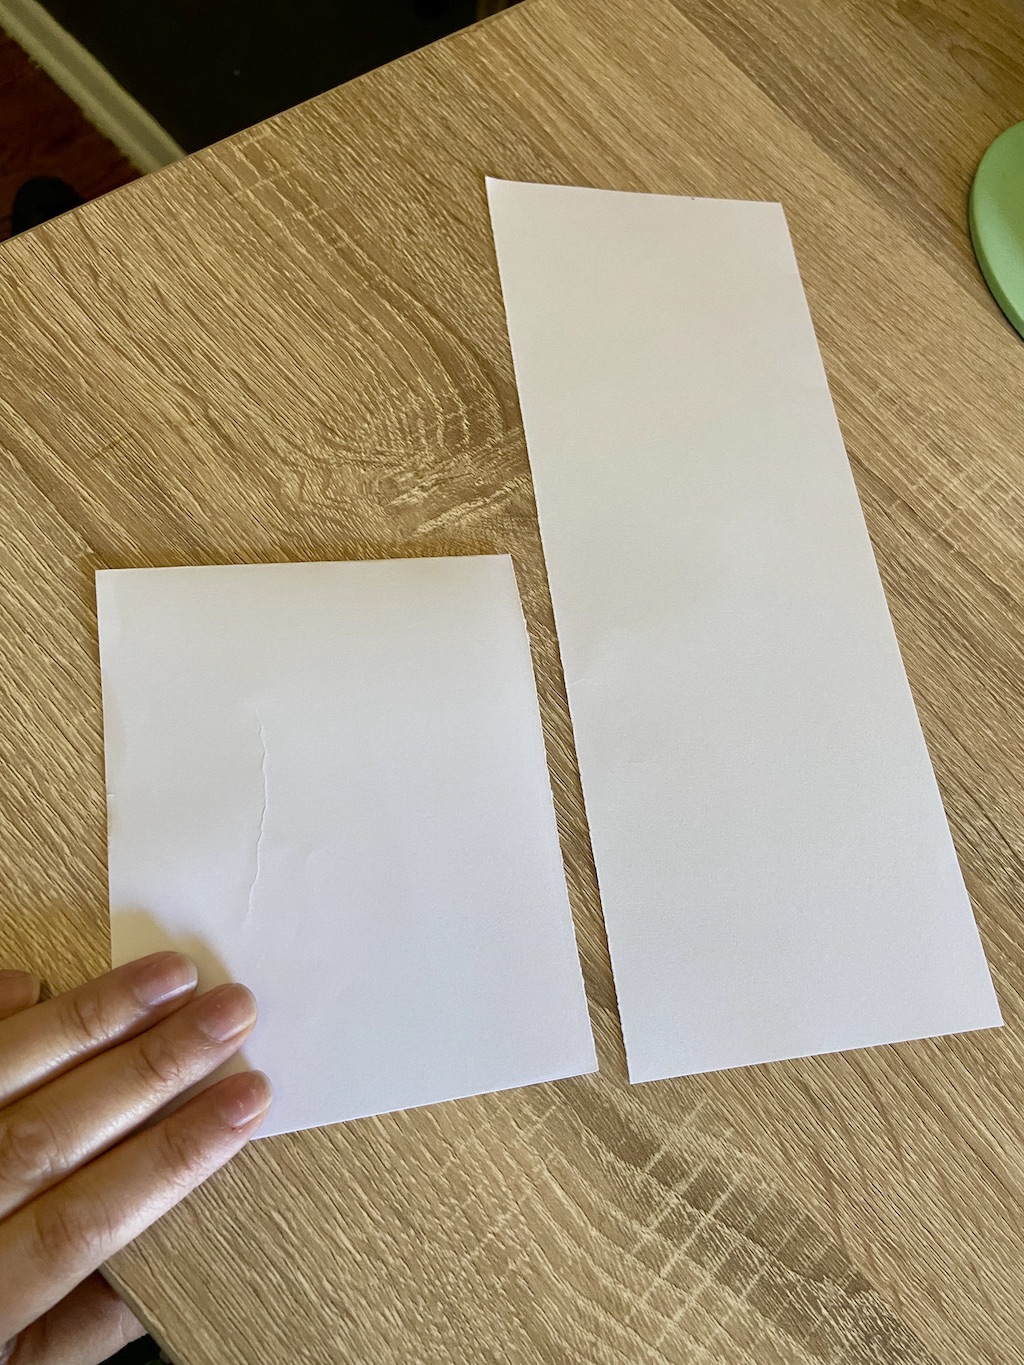 Fold each piece of paper in half widthwise.